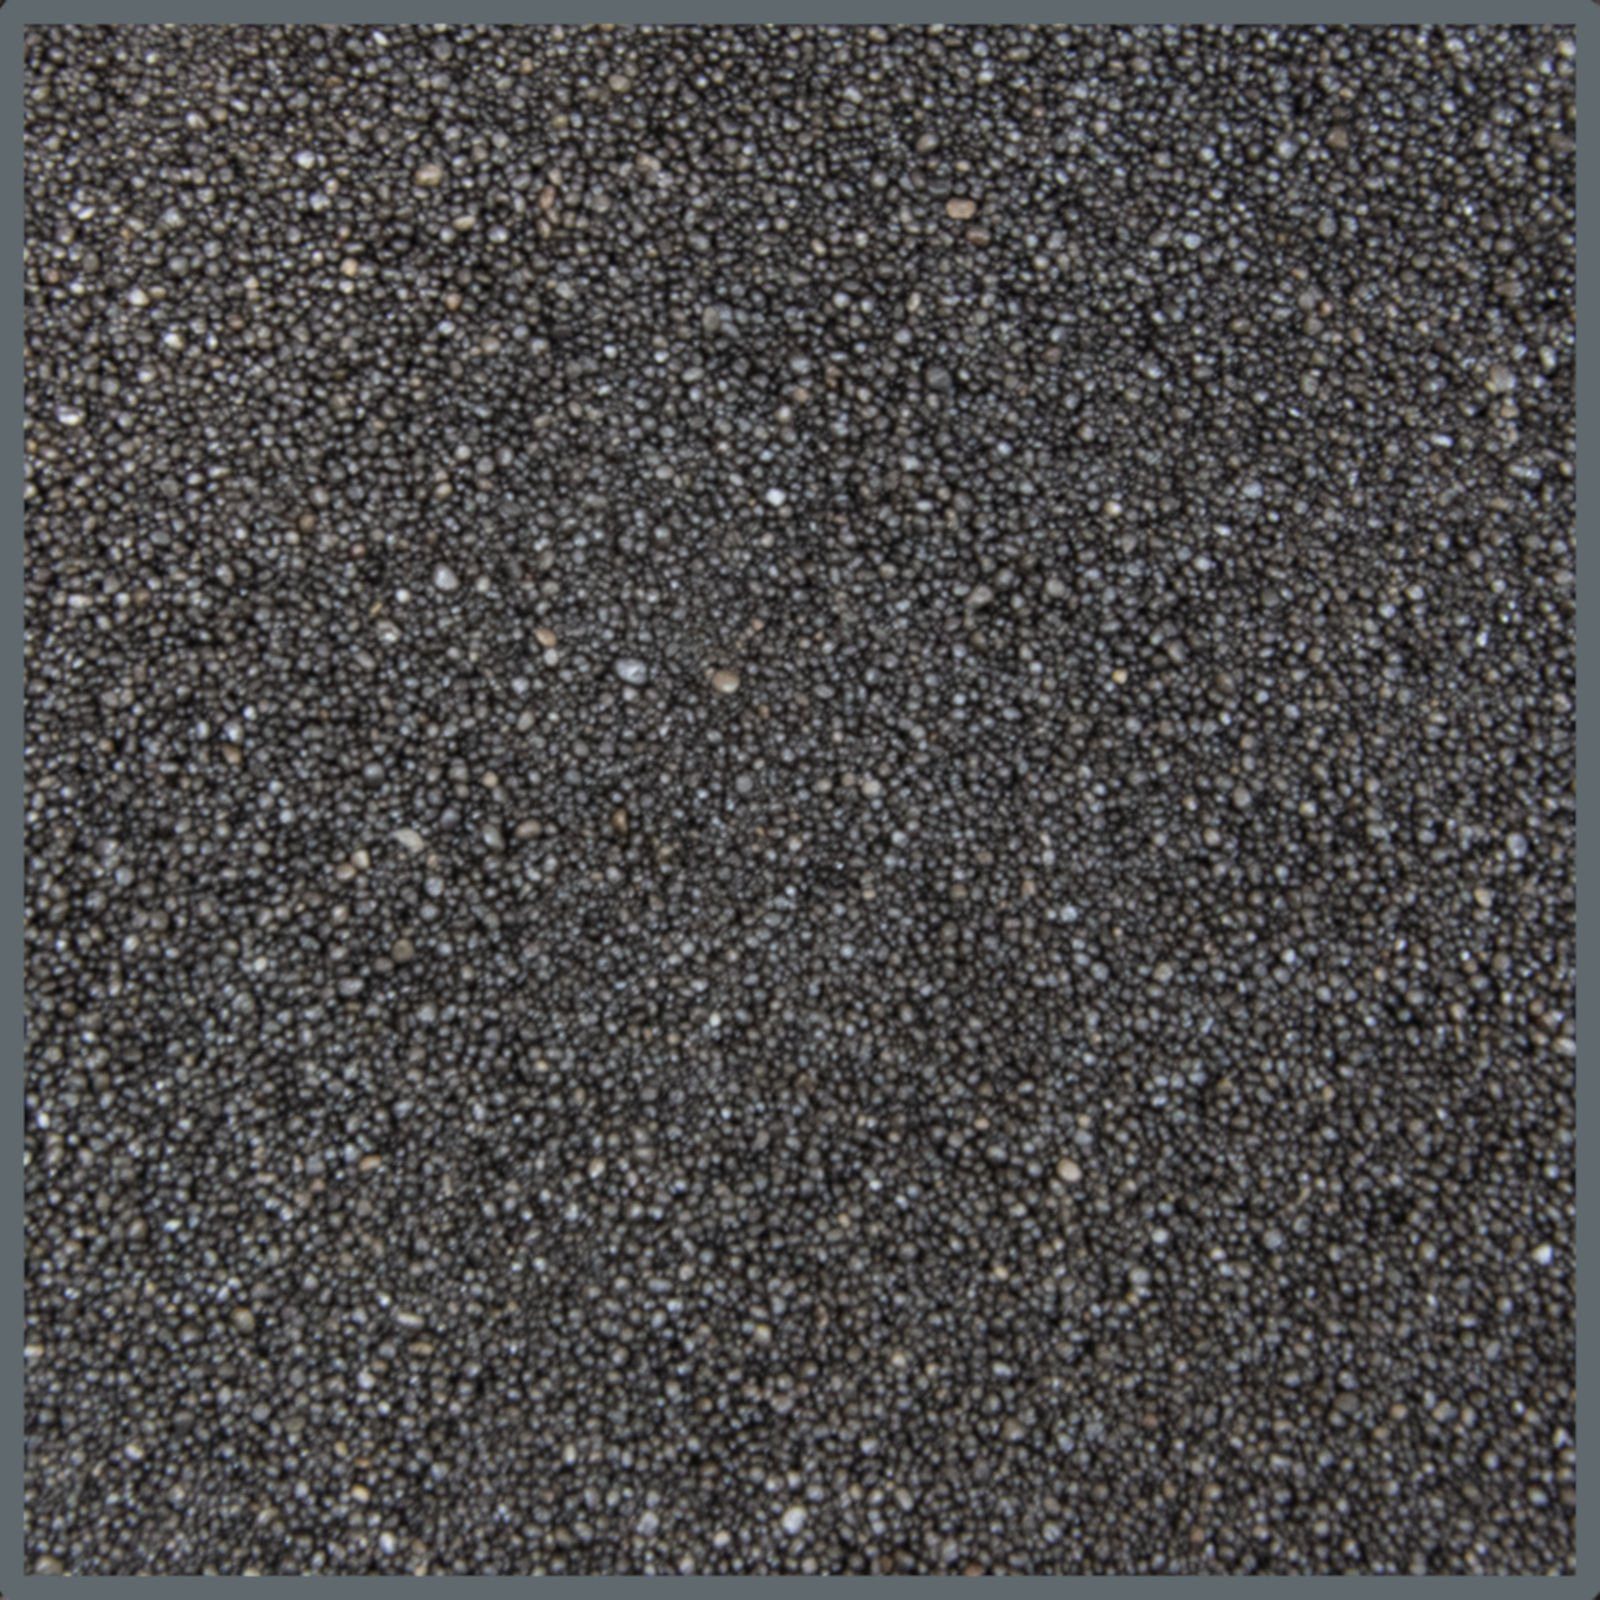 Dupla Aquarienkies Ground Colour, Black Star, 0,5-1,4 mm, 5 kg